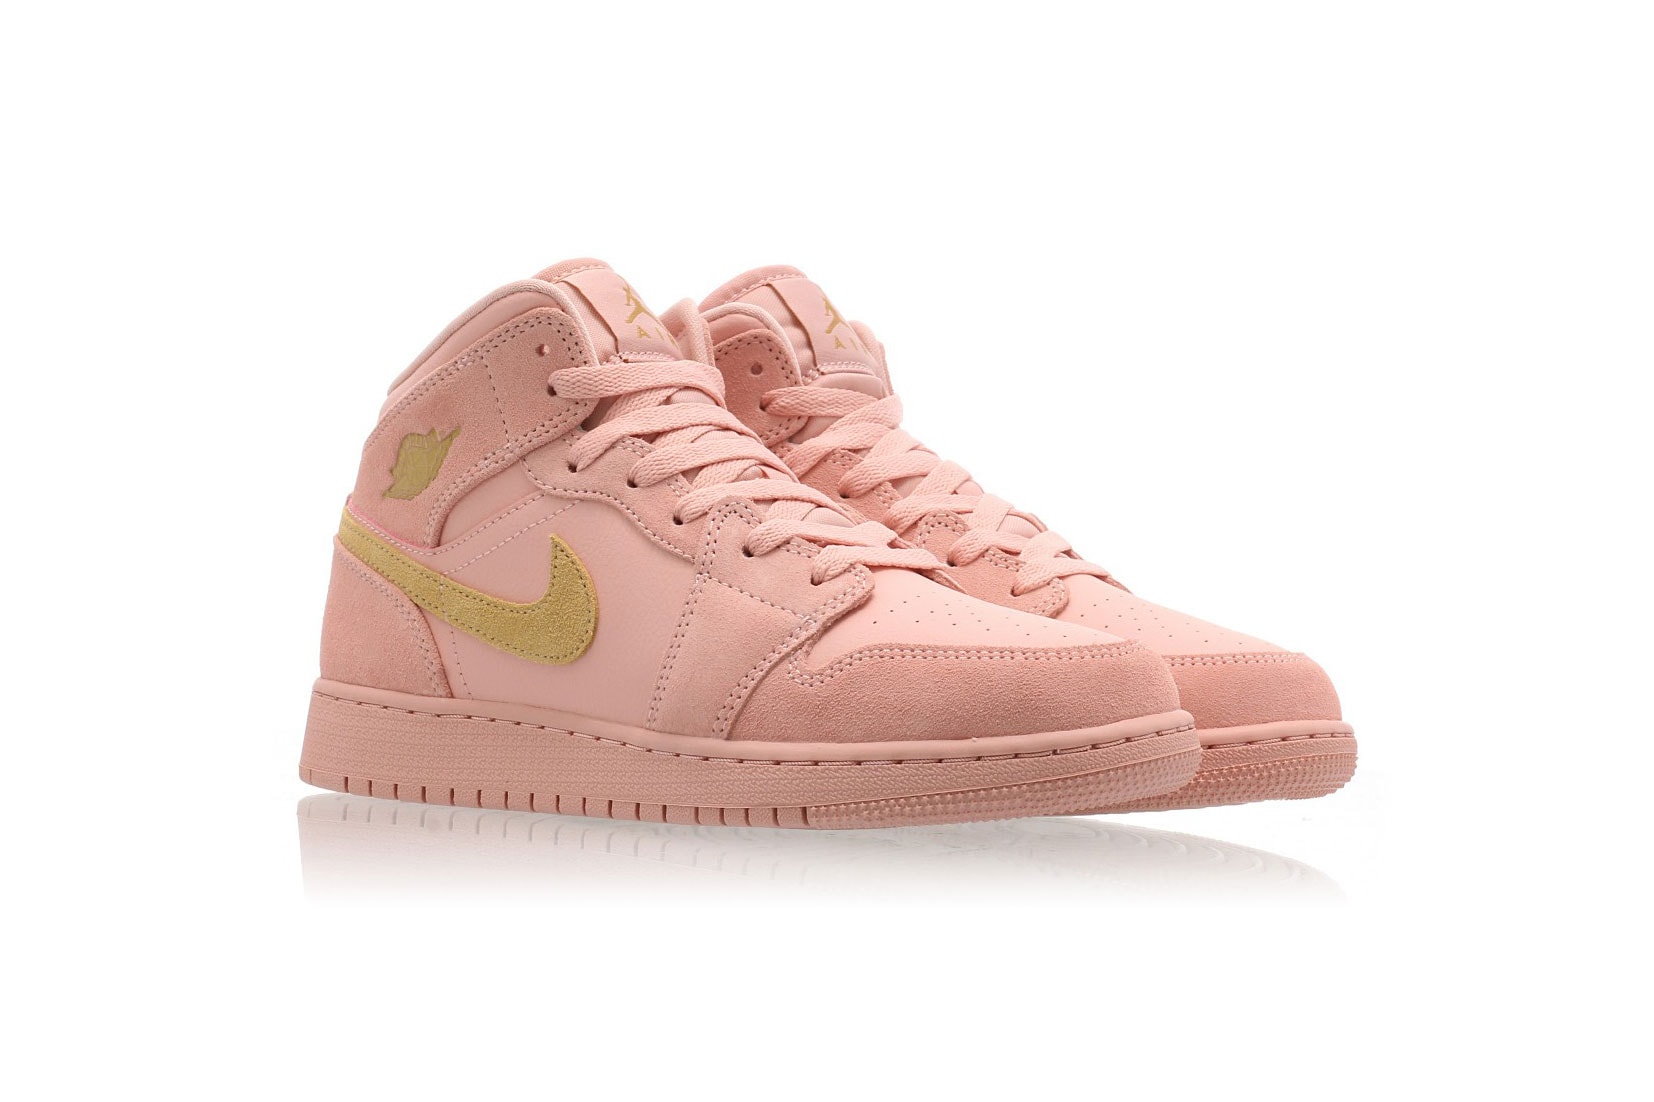 nike air jordan 1 mid gs coral stardust pink gold sneakers 